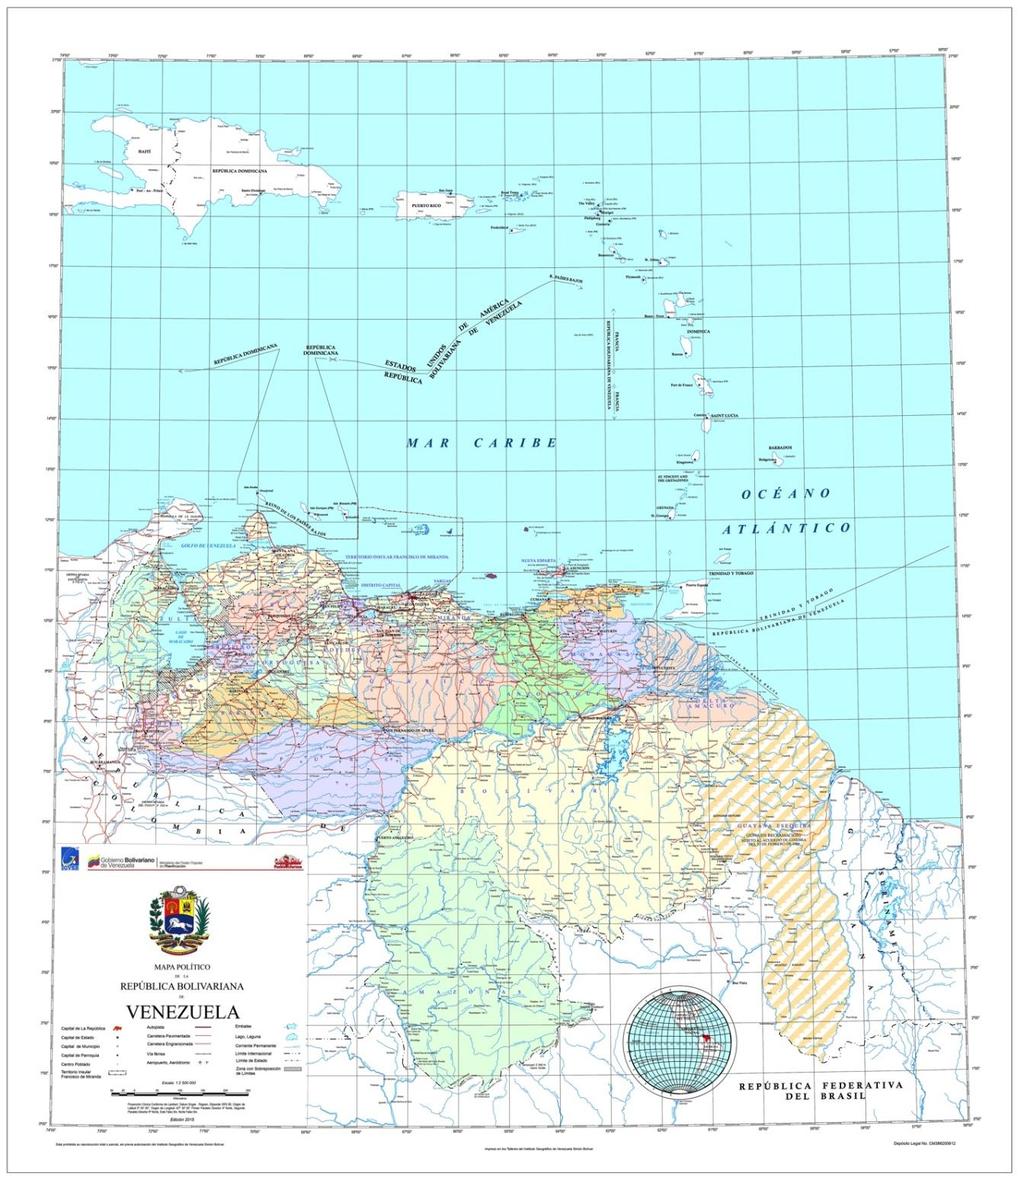 2015: Mapa oficial de la República Bolivariana de Venezuela.